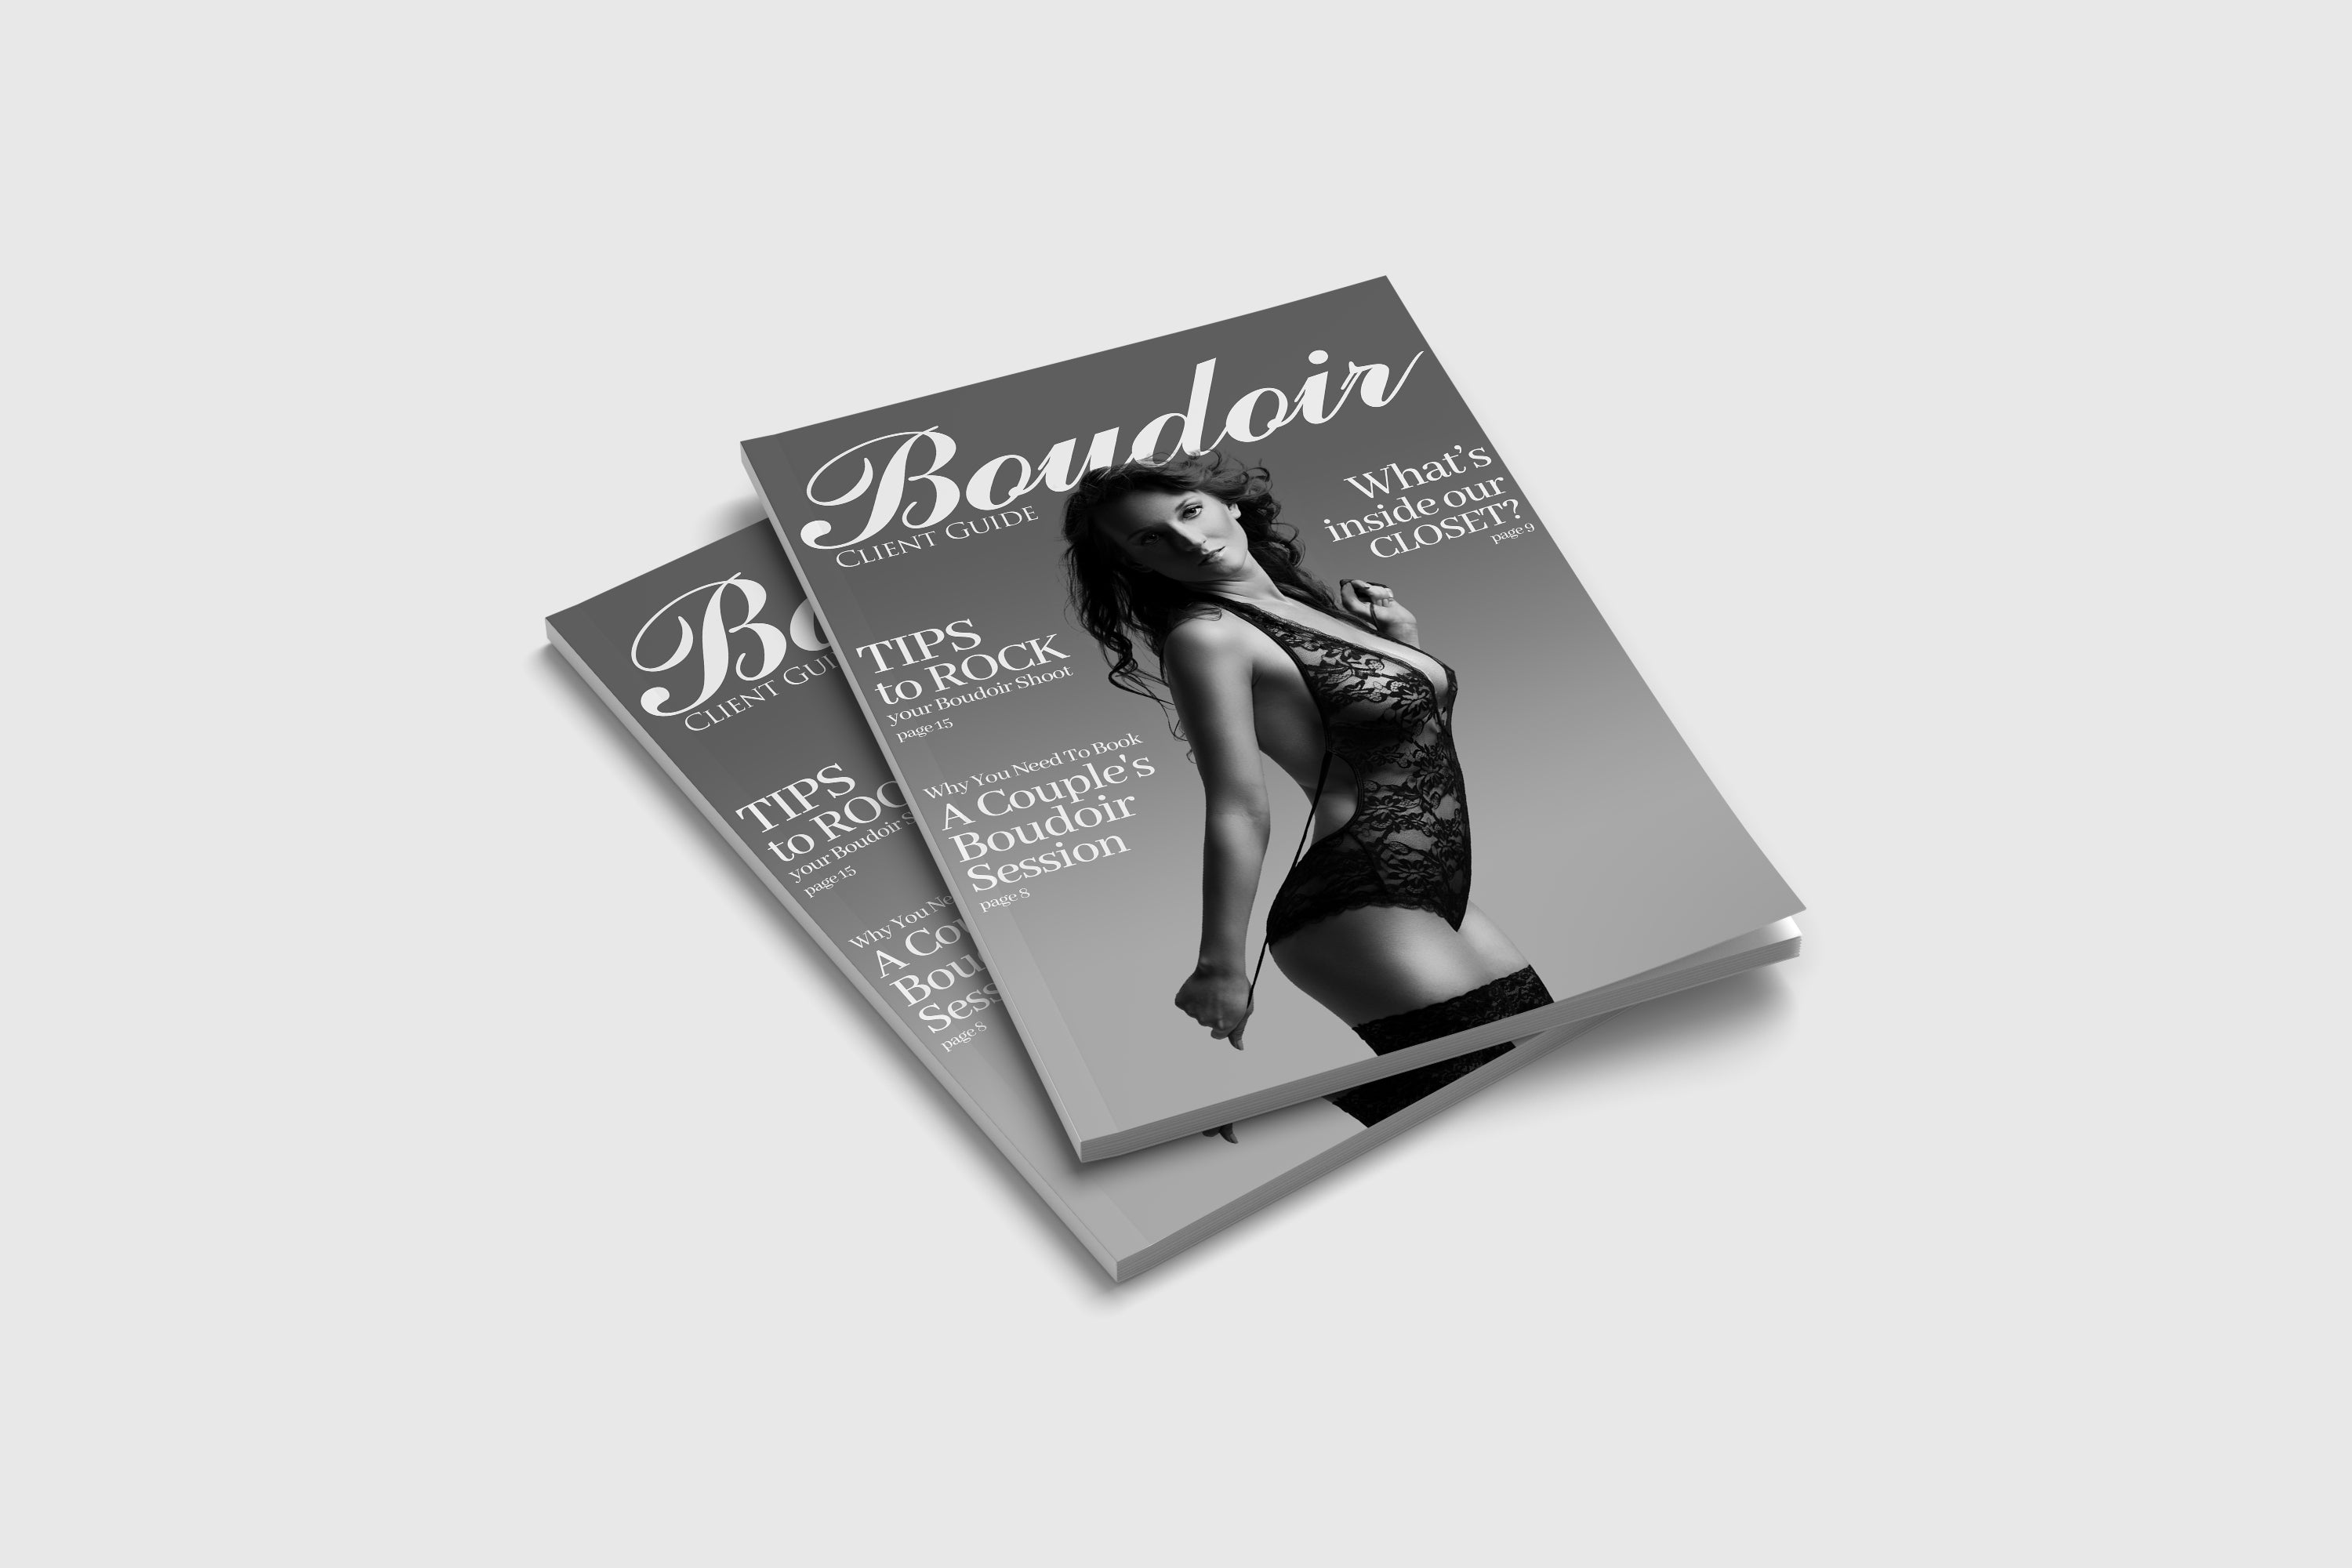 boudoir client guide for boudoir photography sessions